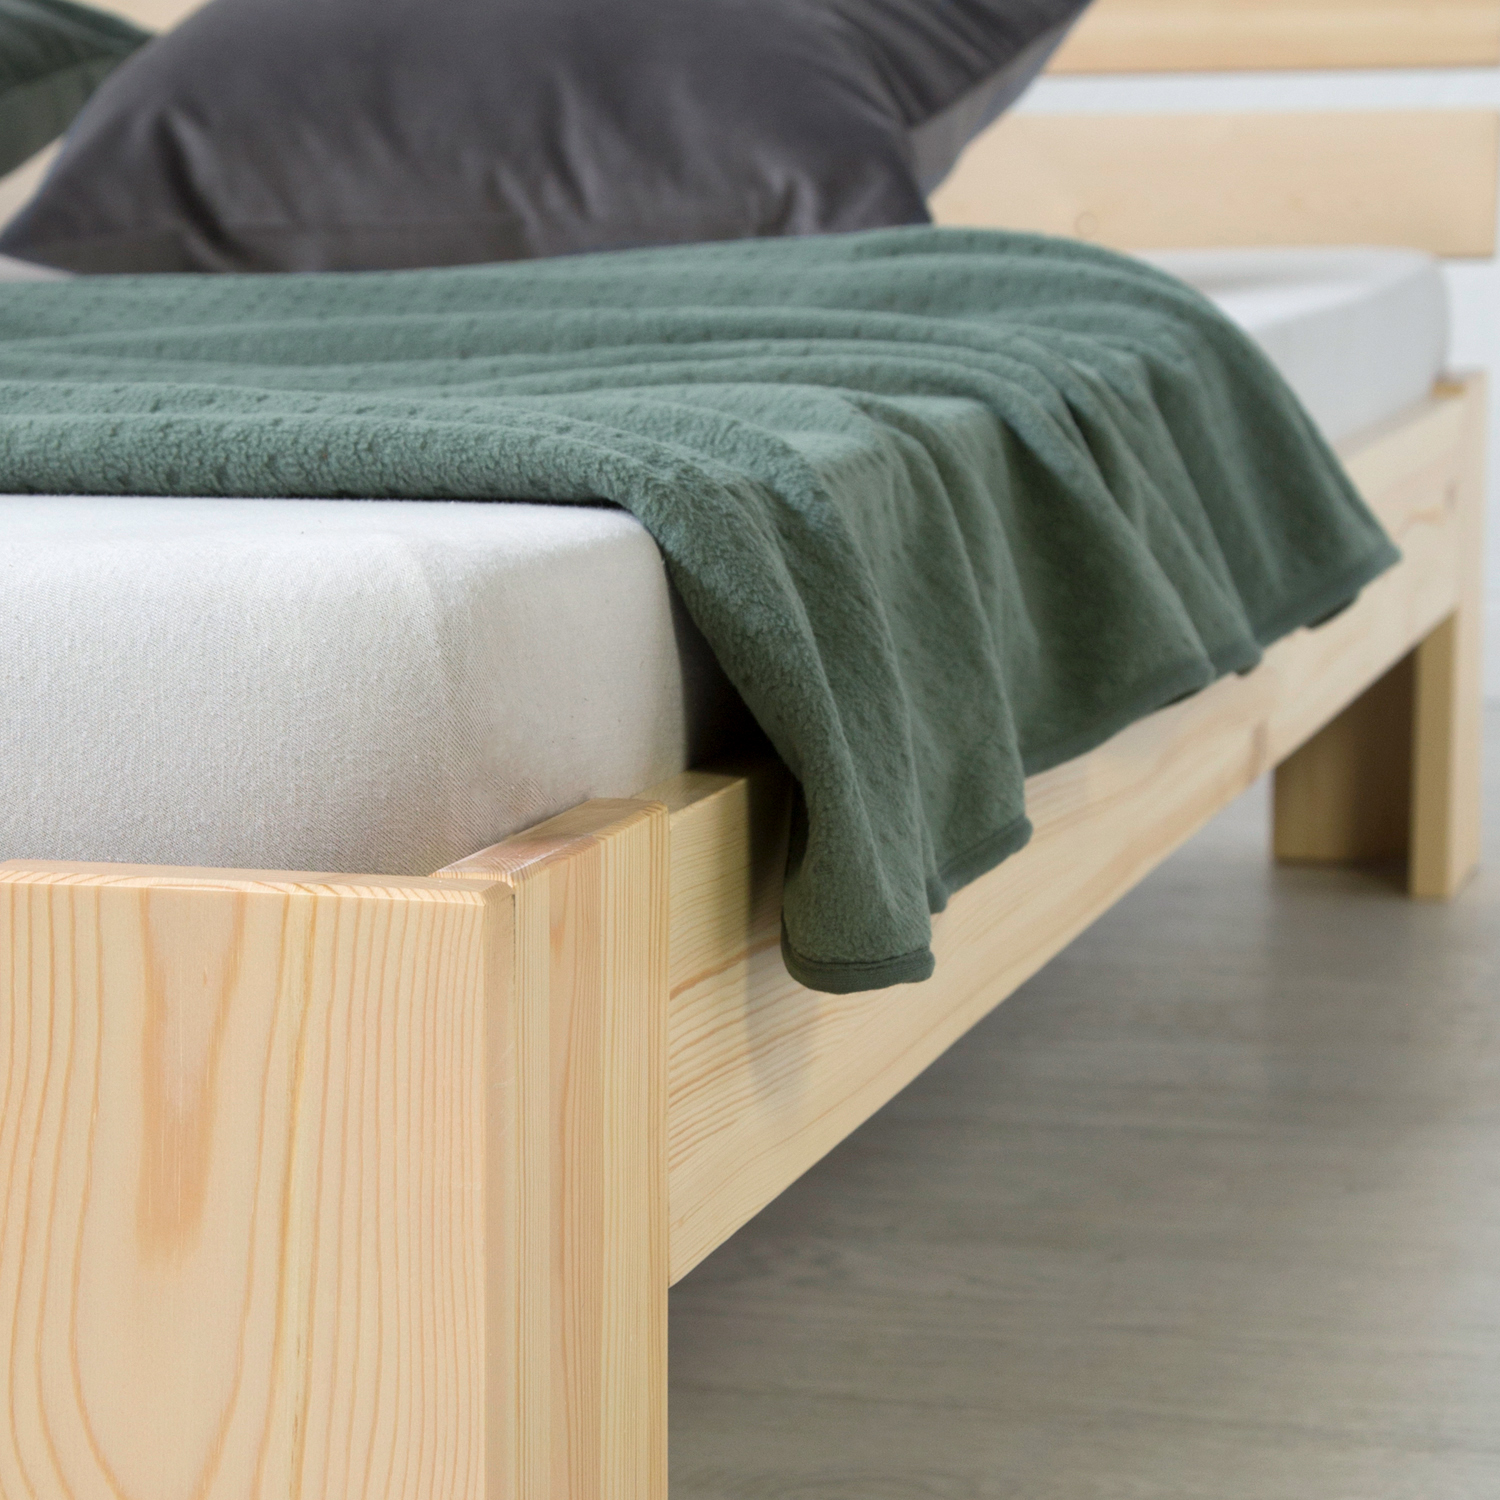 Einzelbett Holzbett 90x200 mit Lattenrost Natur Kiefer Bett Bettgestell Massivholz